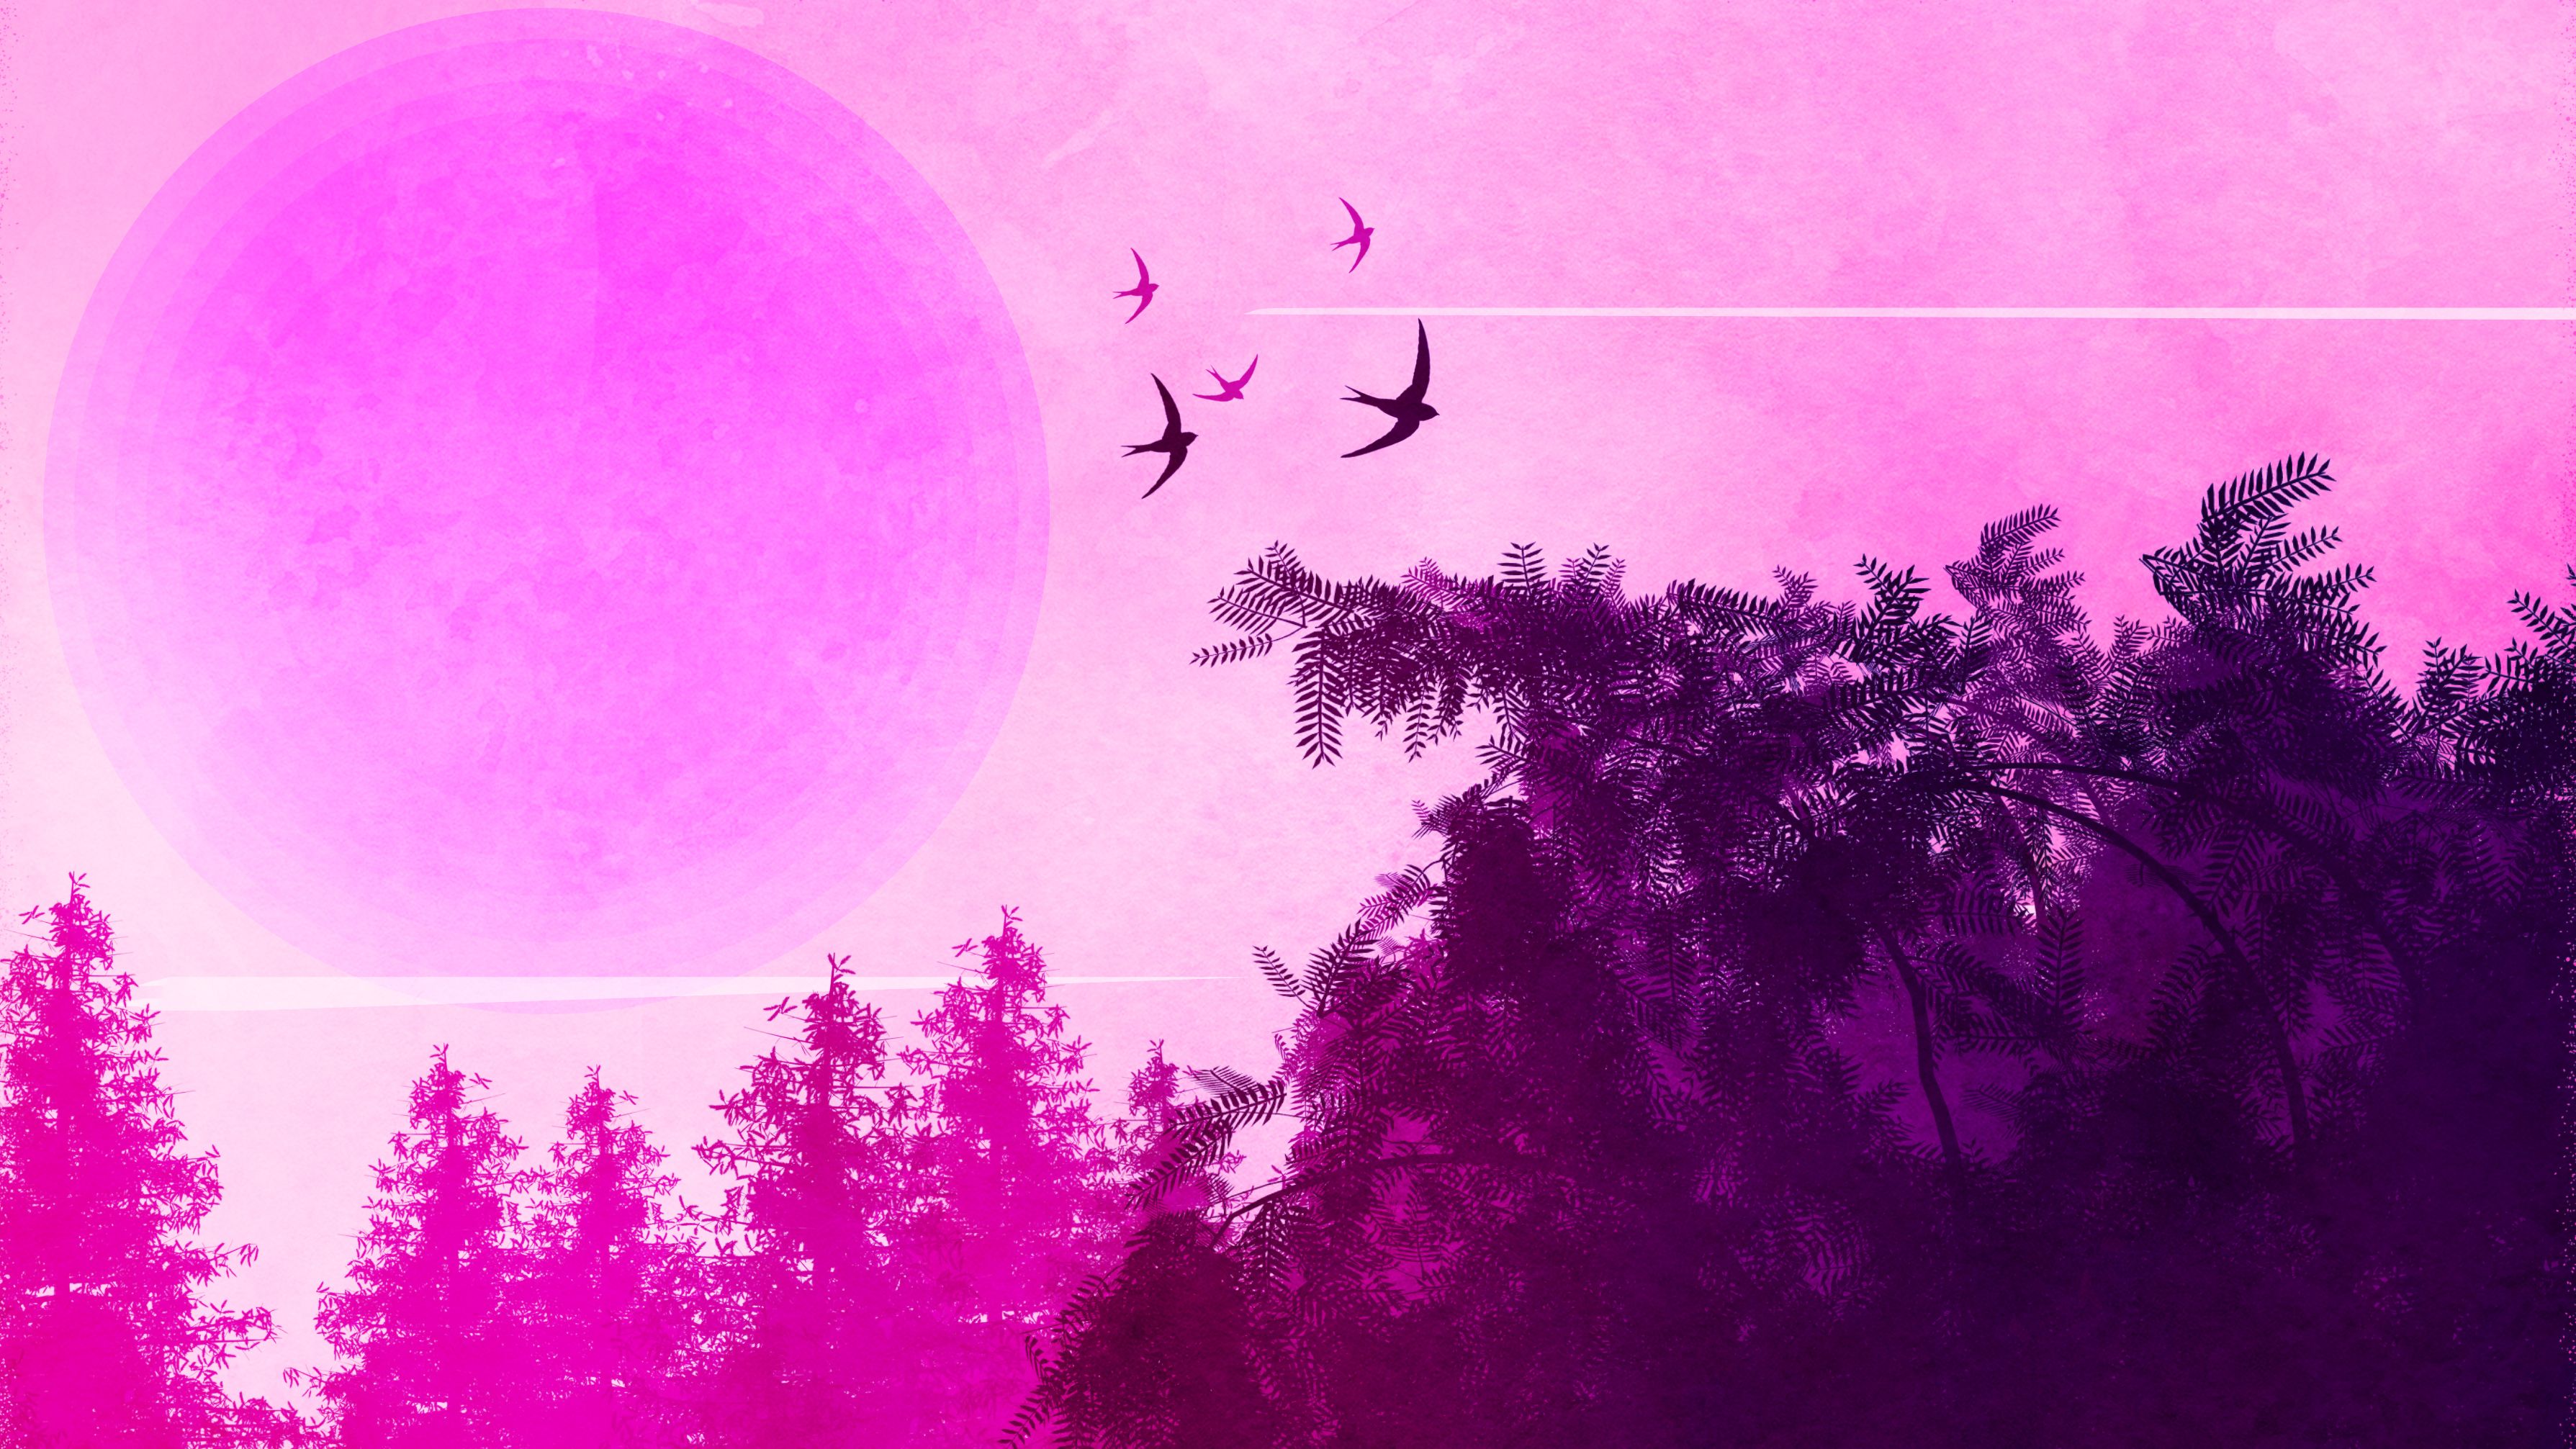 Pink Birds Forest Landscape 4k, HD Artist, 4k Wallpaper, Image, Background, Photo and Picture